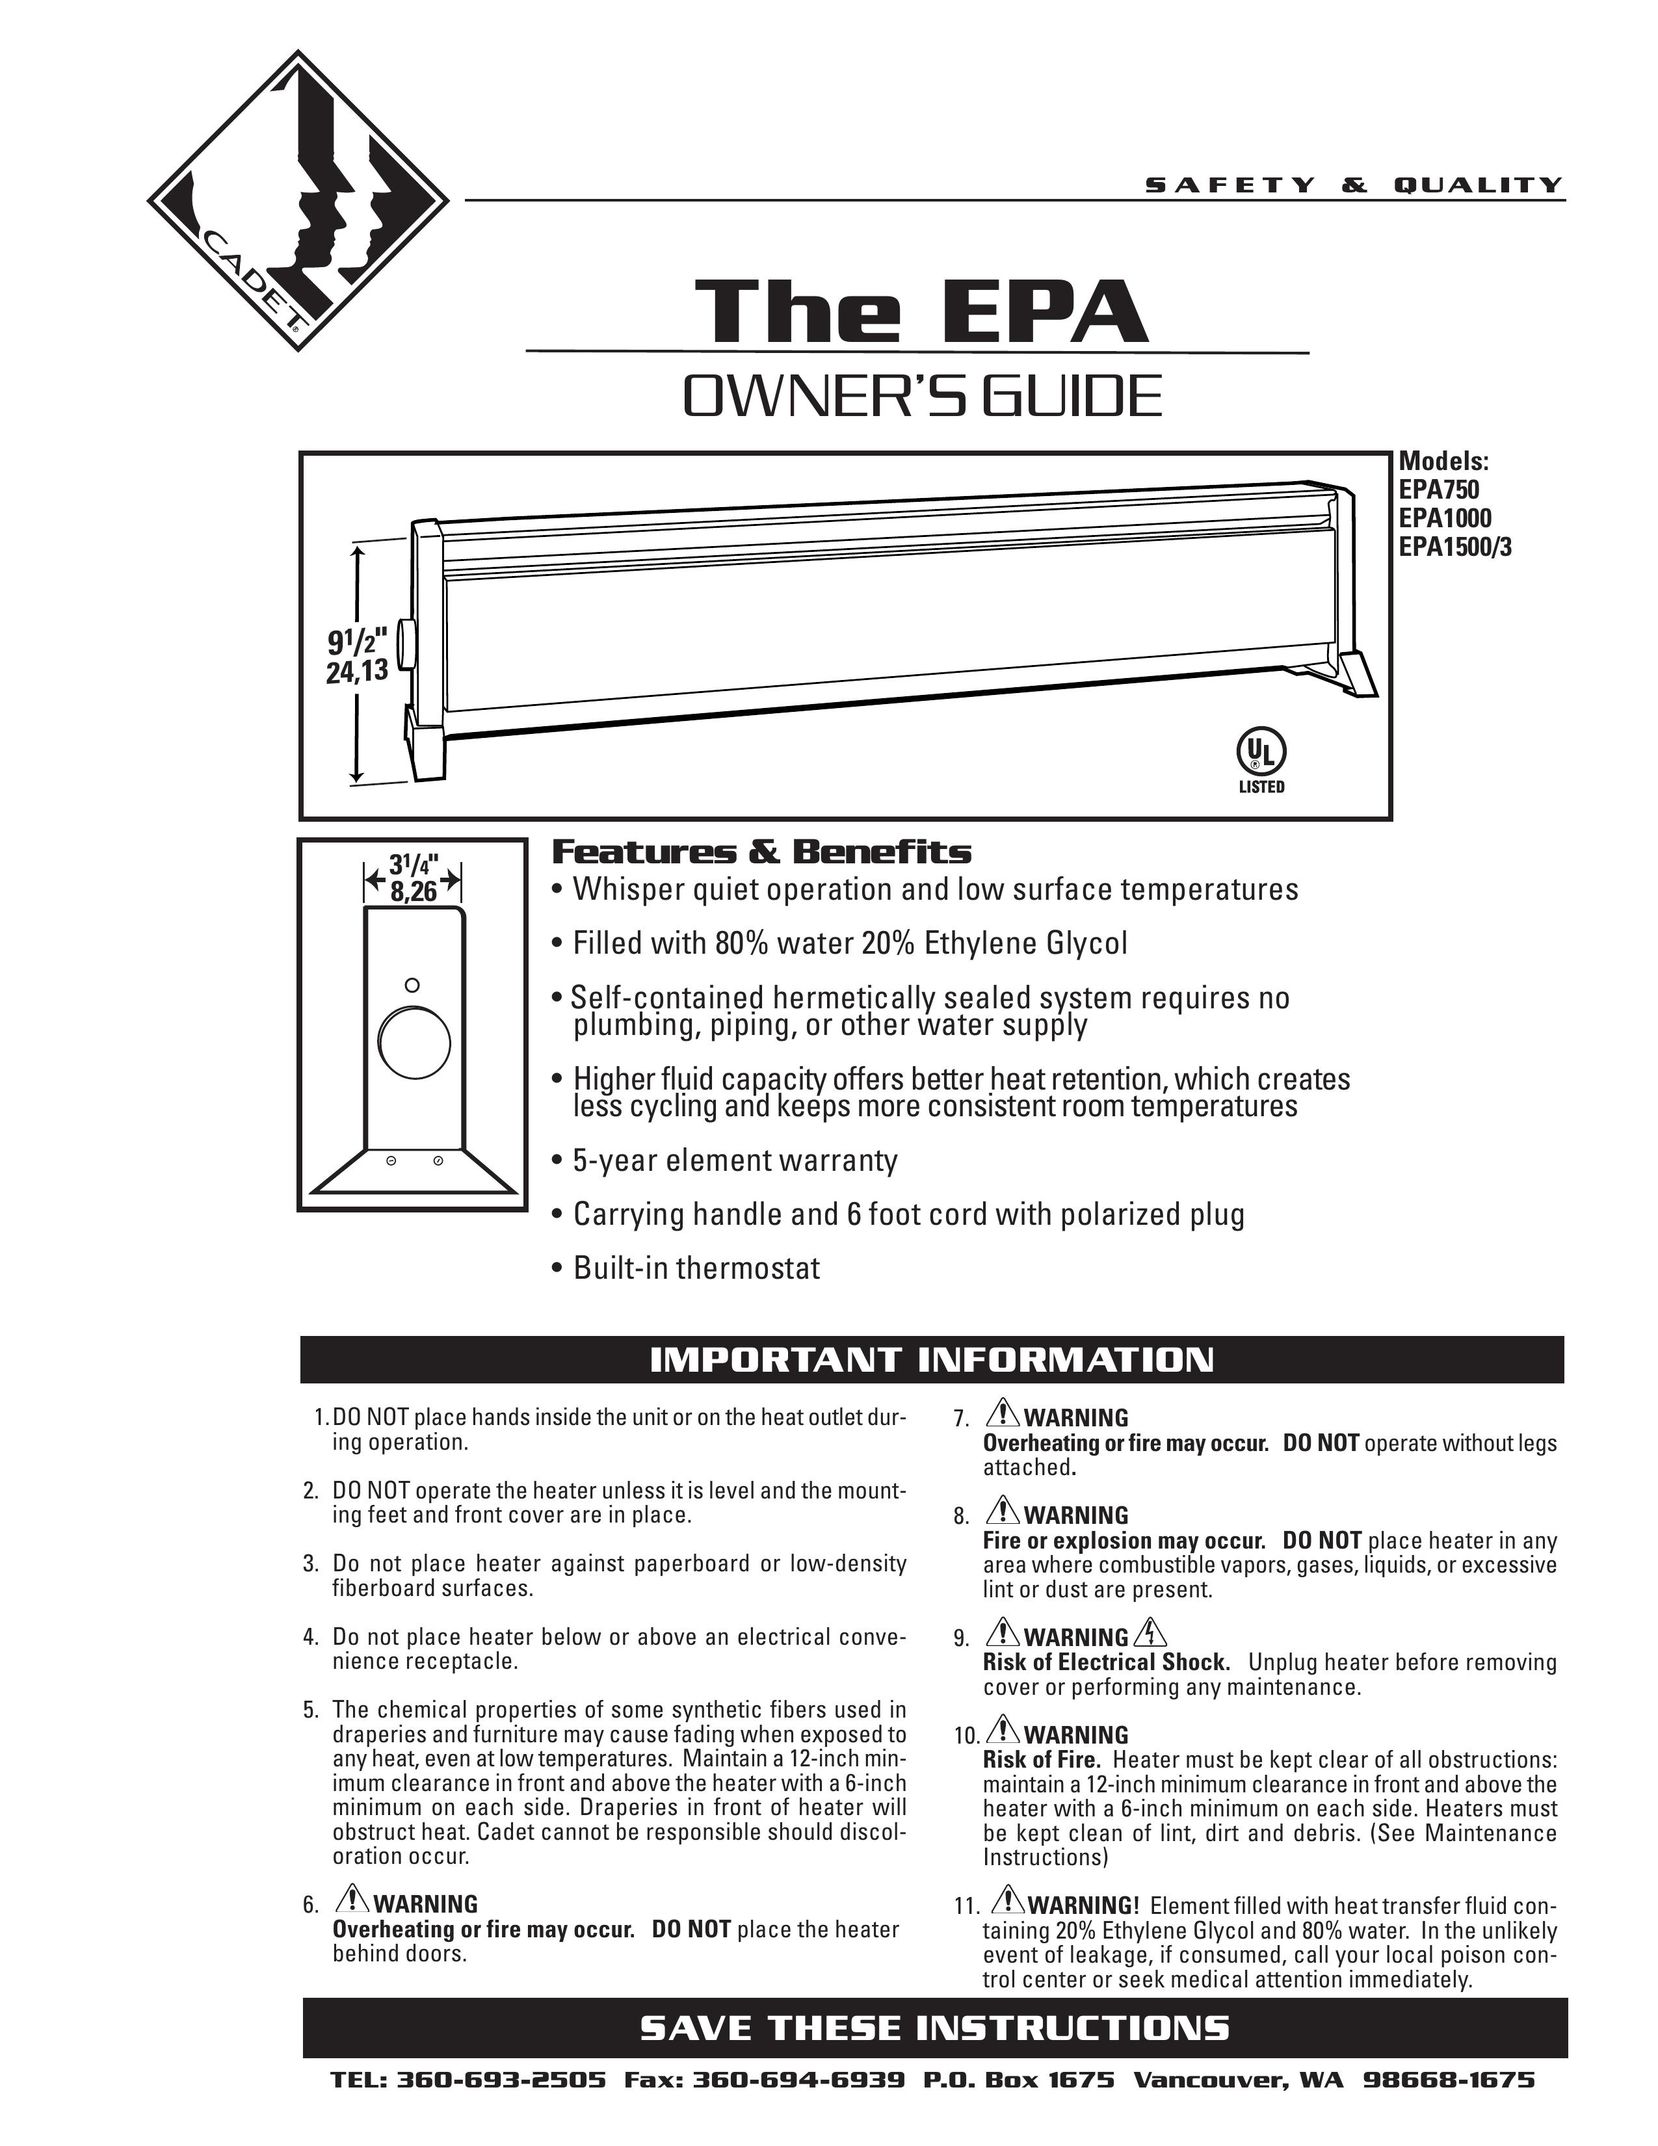 Cadet EPA1500/3 Electric Heater User Manual